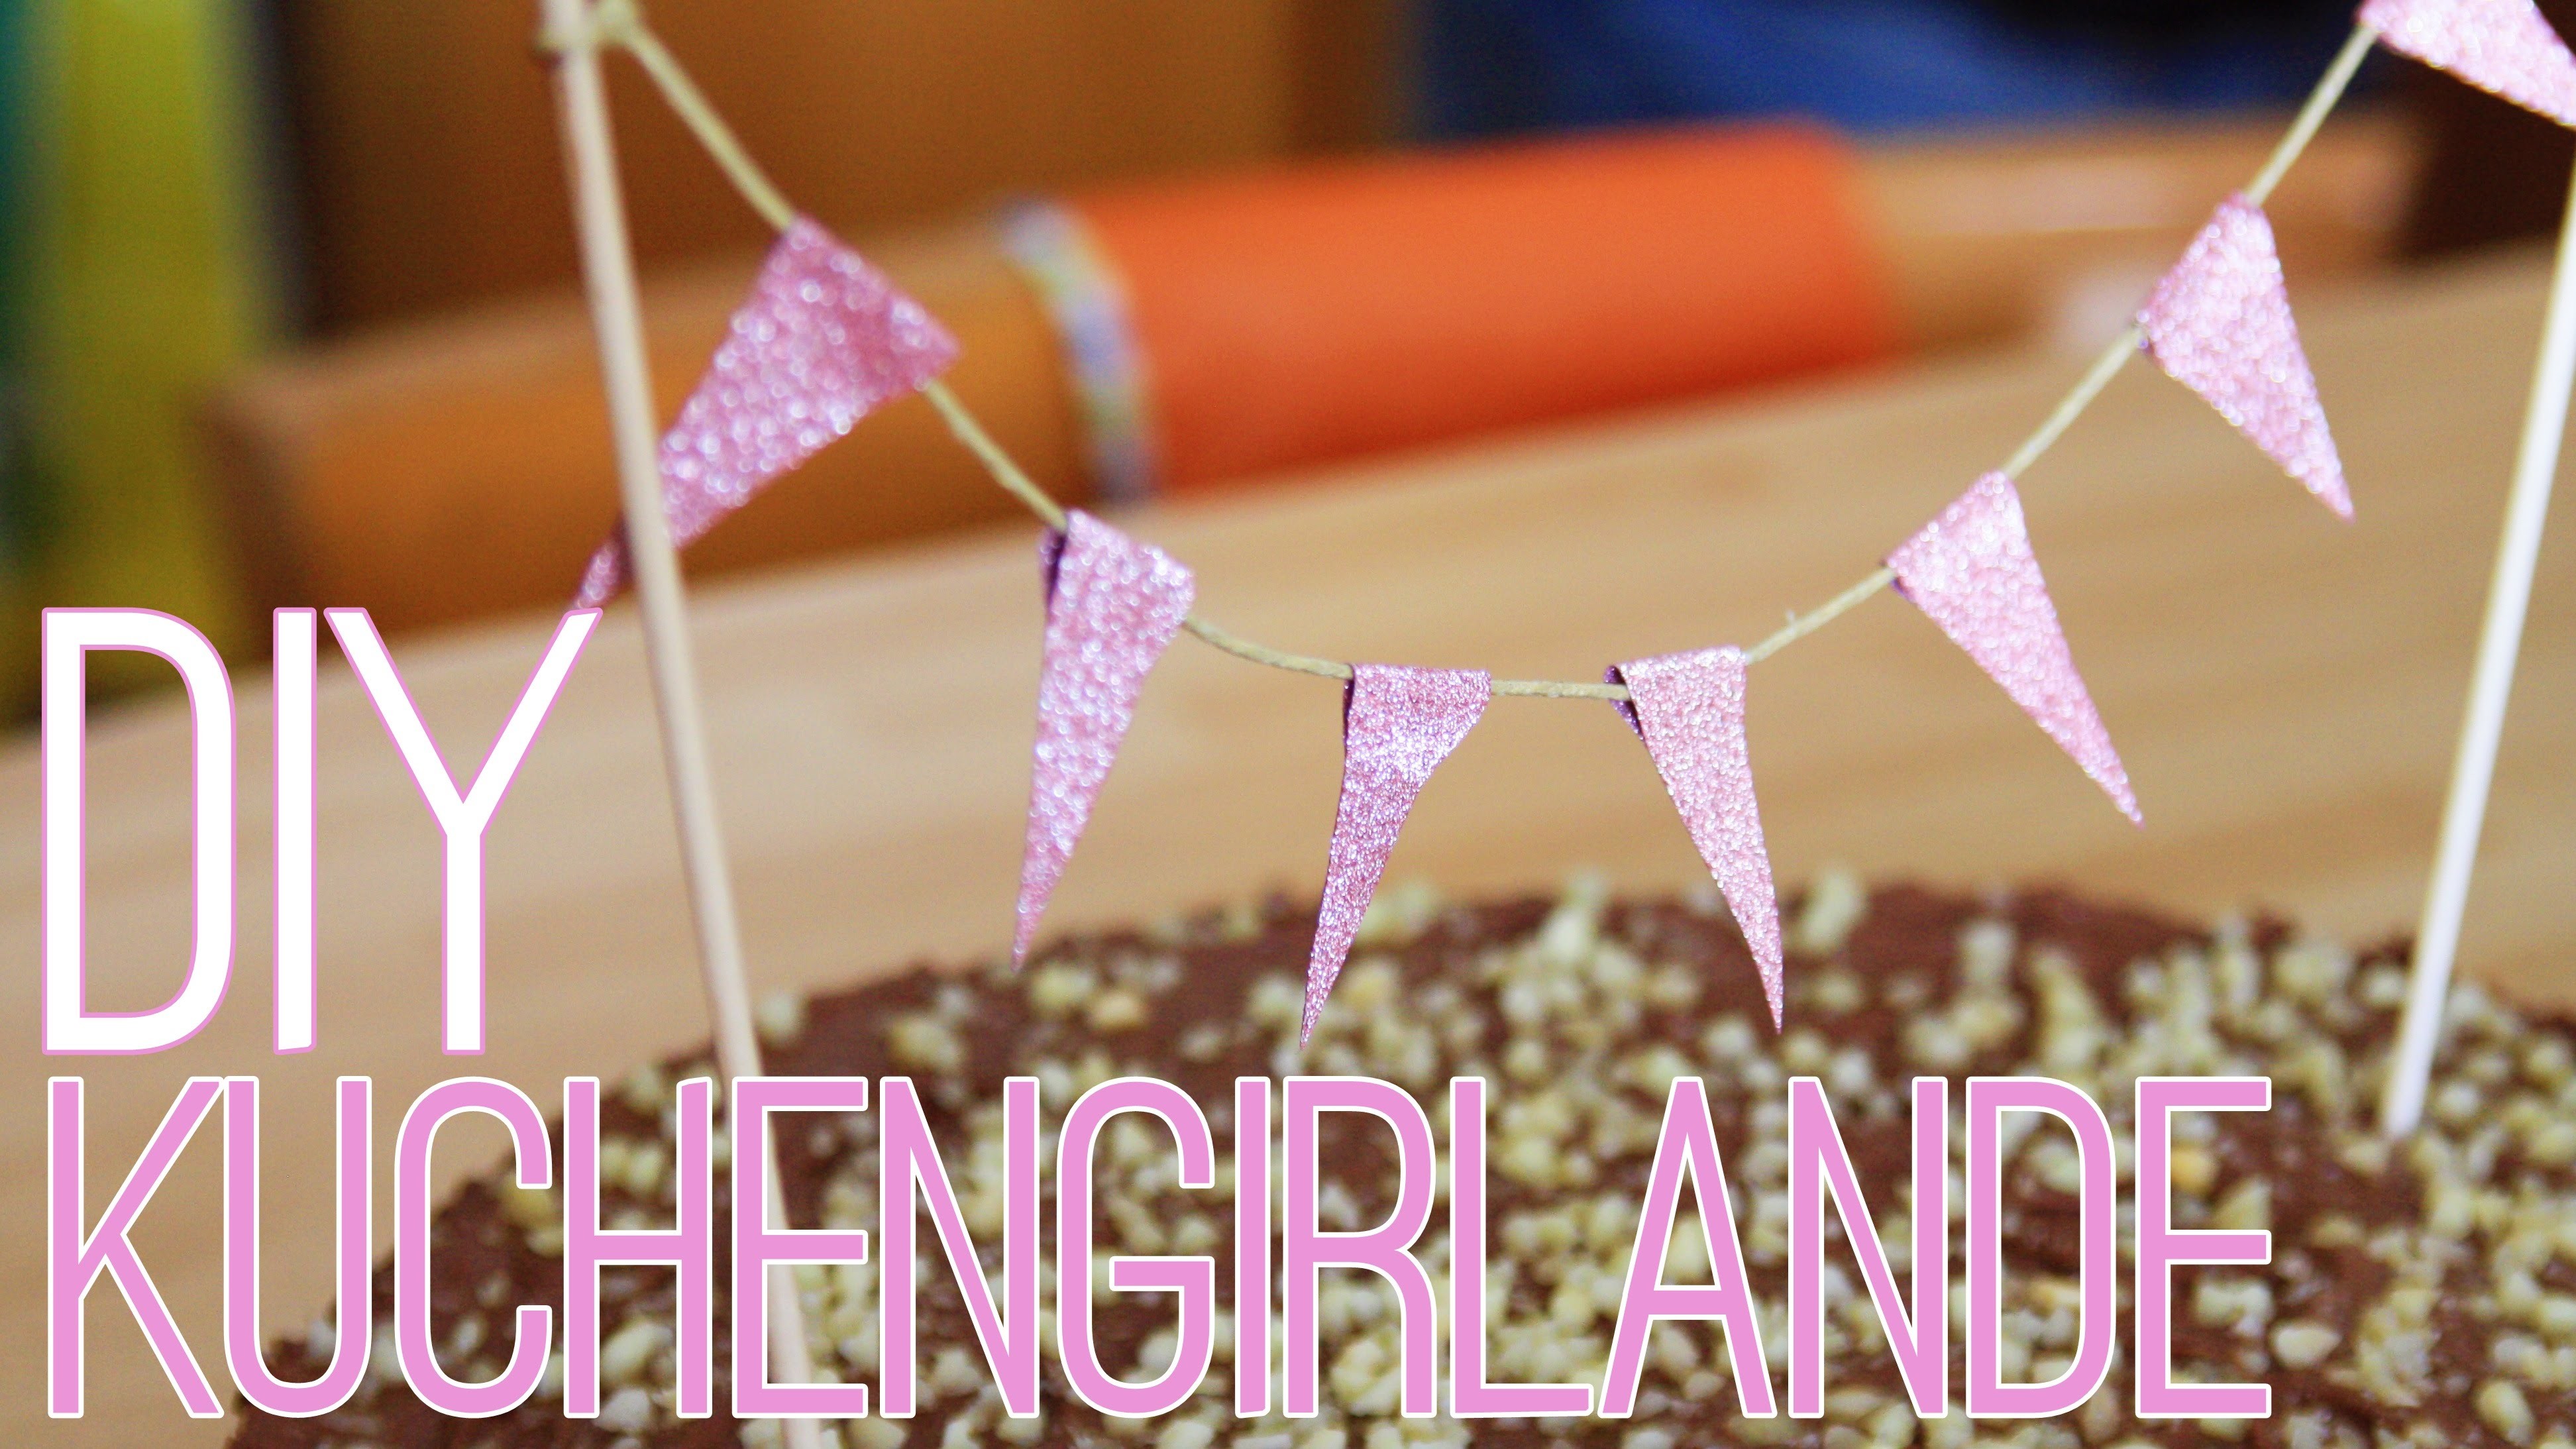 DIY #3 - KUCHENGIRLANDE | DECORATE YOUR CAKE